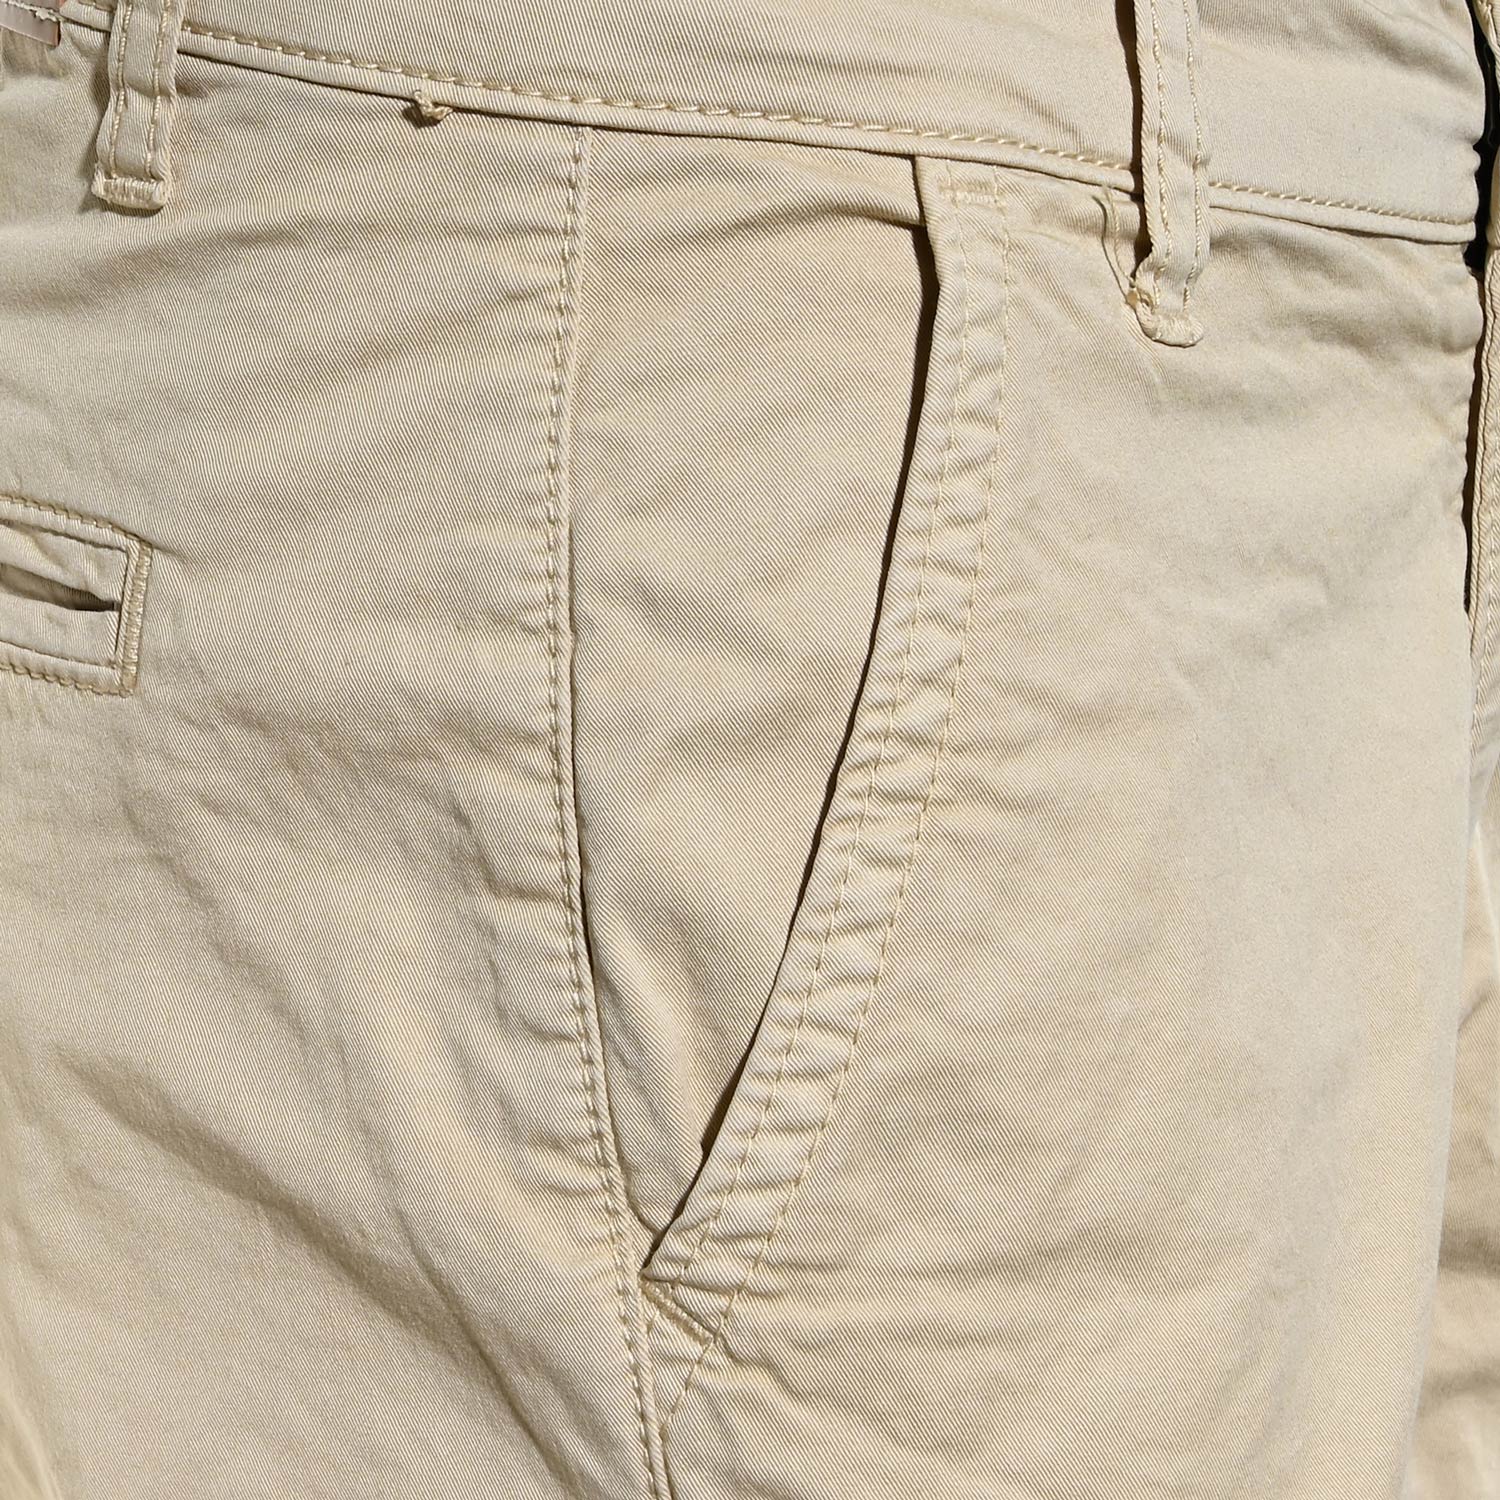 2851-Boys Wide Leg Cargo Pant verfügbar in Normal